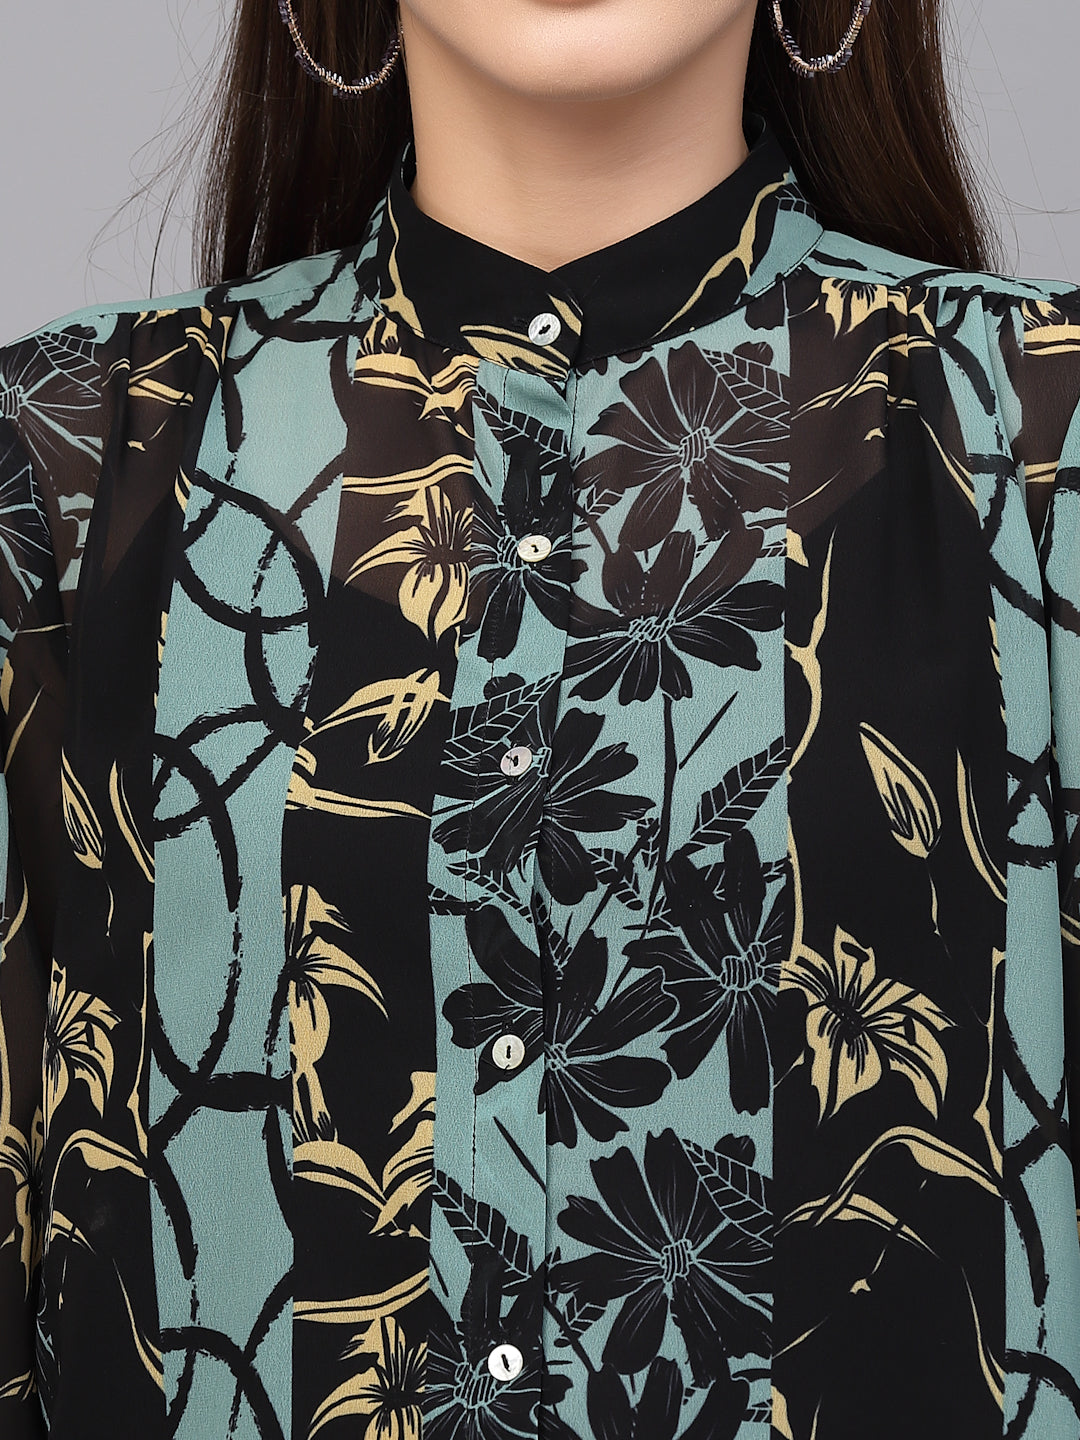 Valbone Women’s Black Green Georgette Floral Printed Shirt